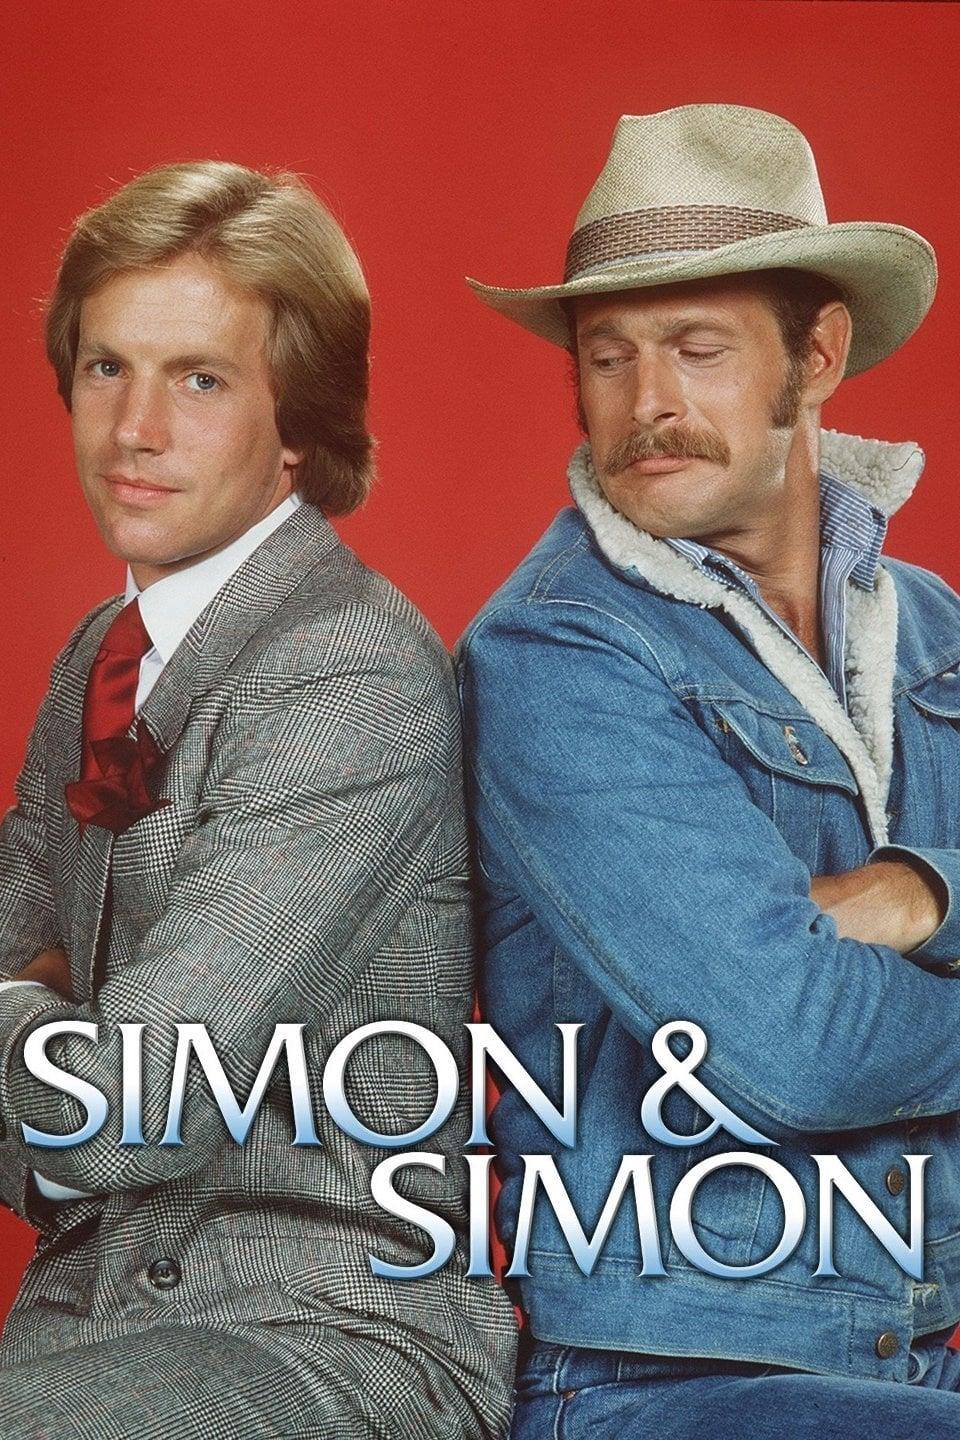 Simon & Simon poster